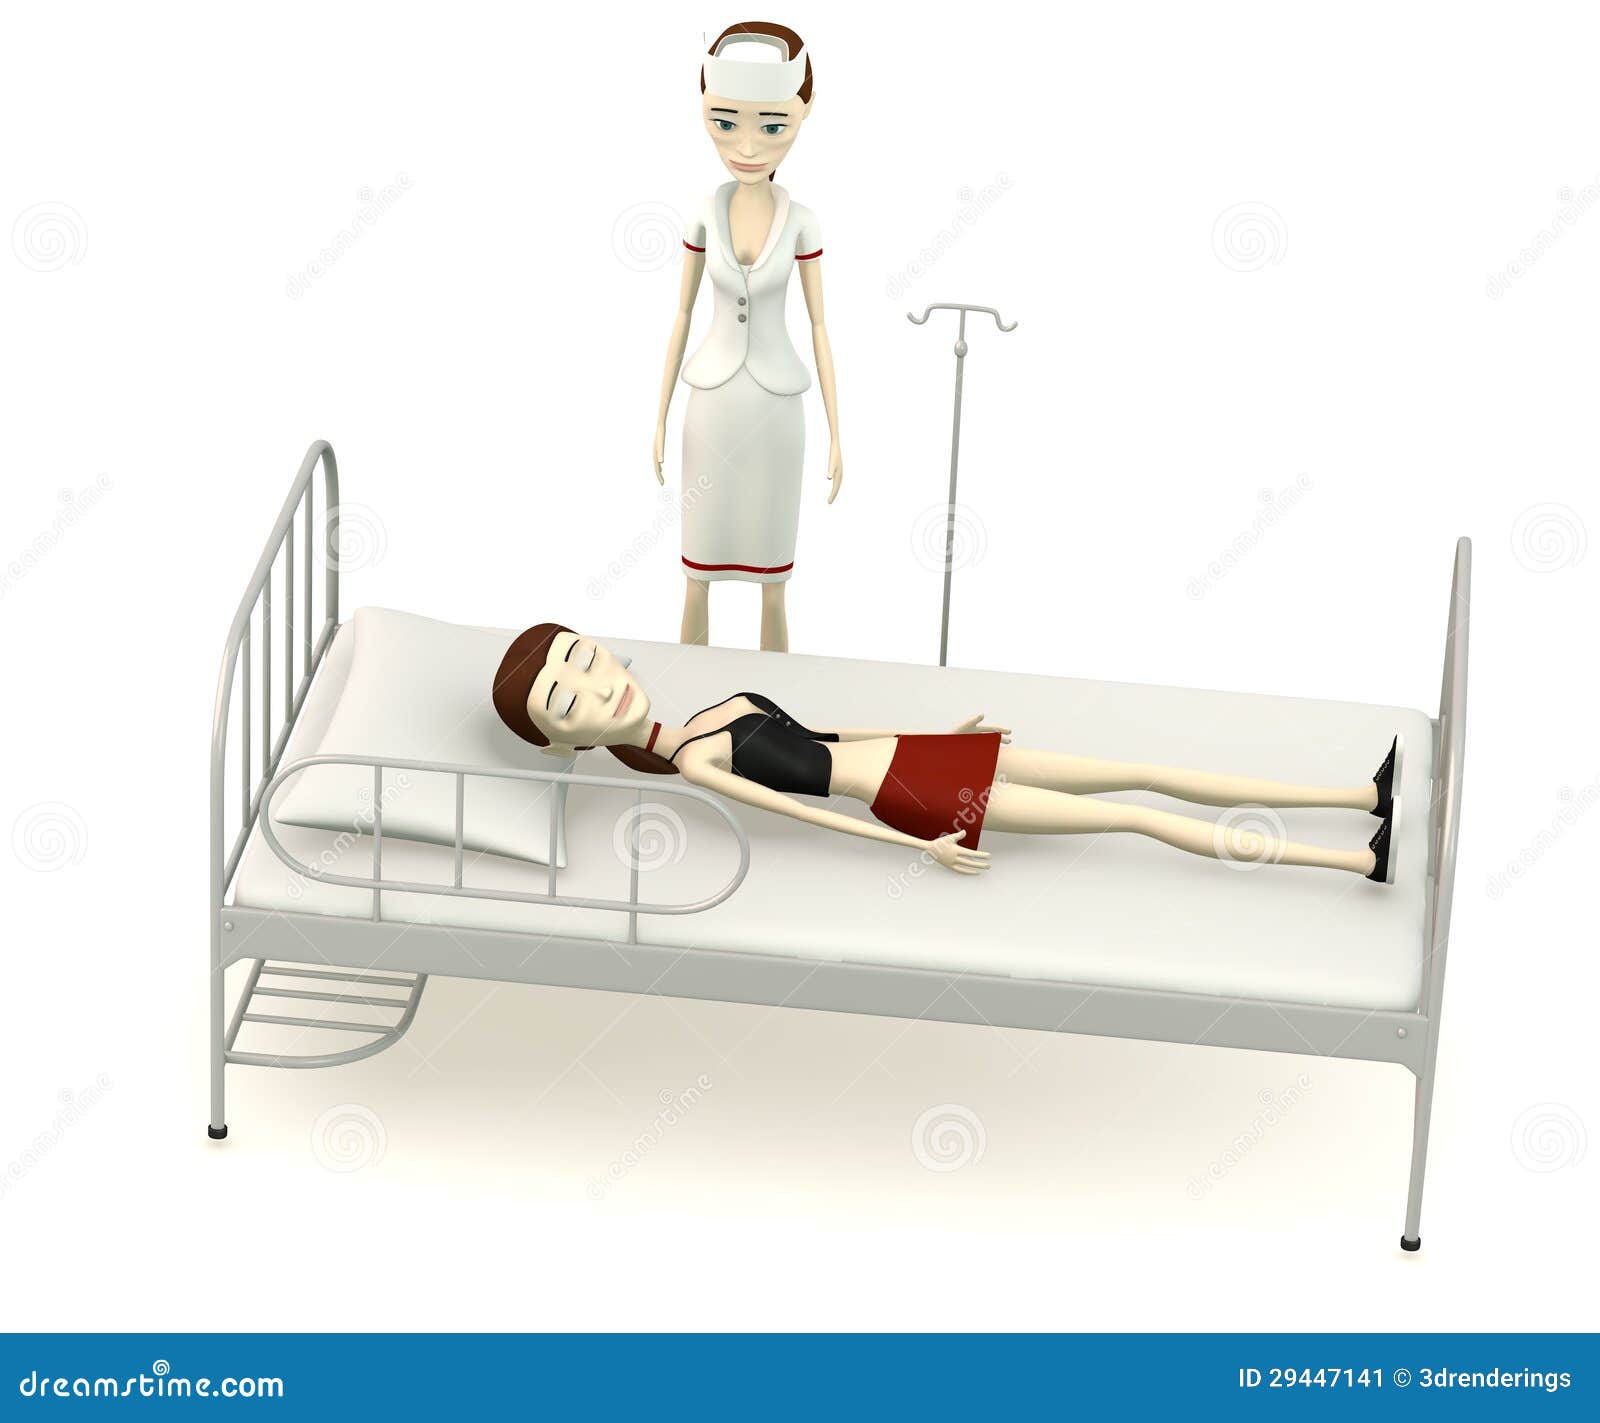 Cartoon Girl On Hospital Bed With Nurse Stock Image - Image: 29447141